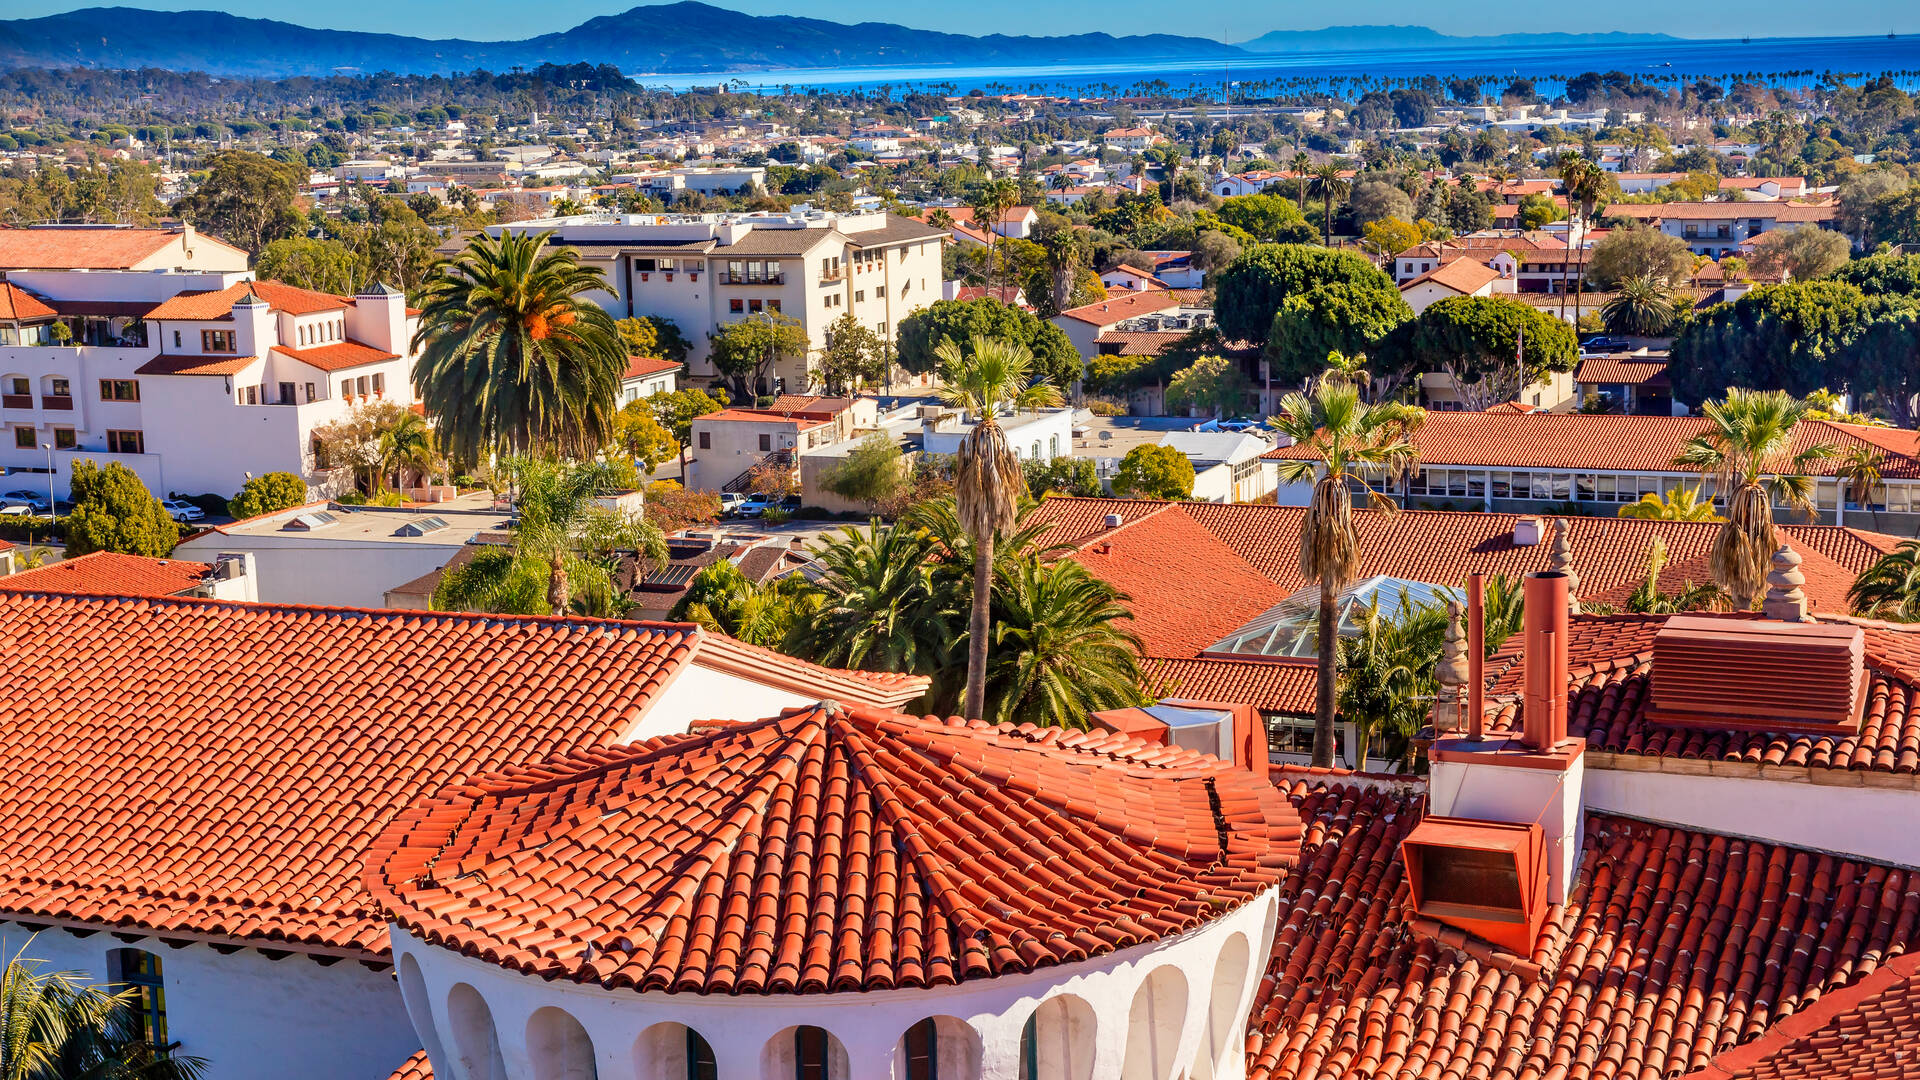 Santa Barbara, USA